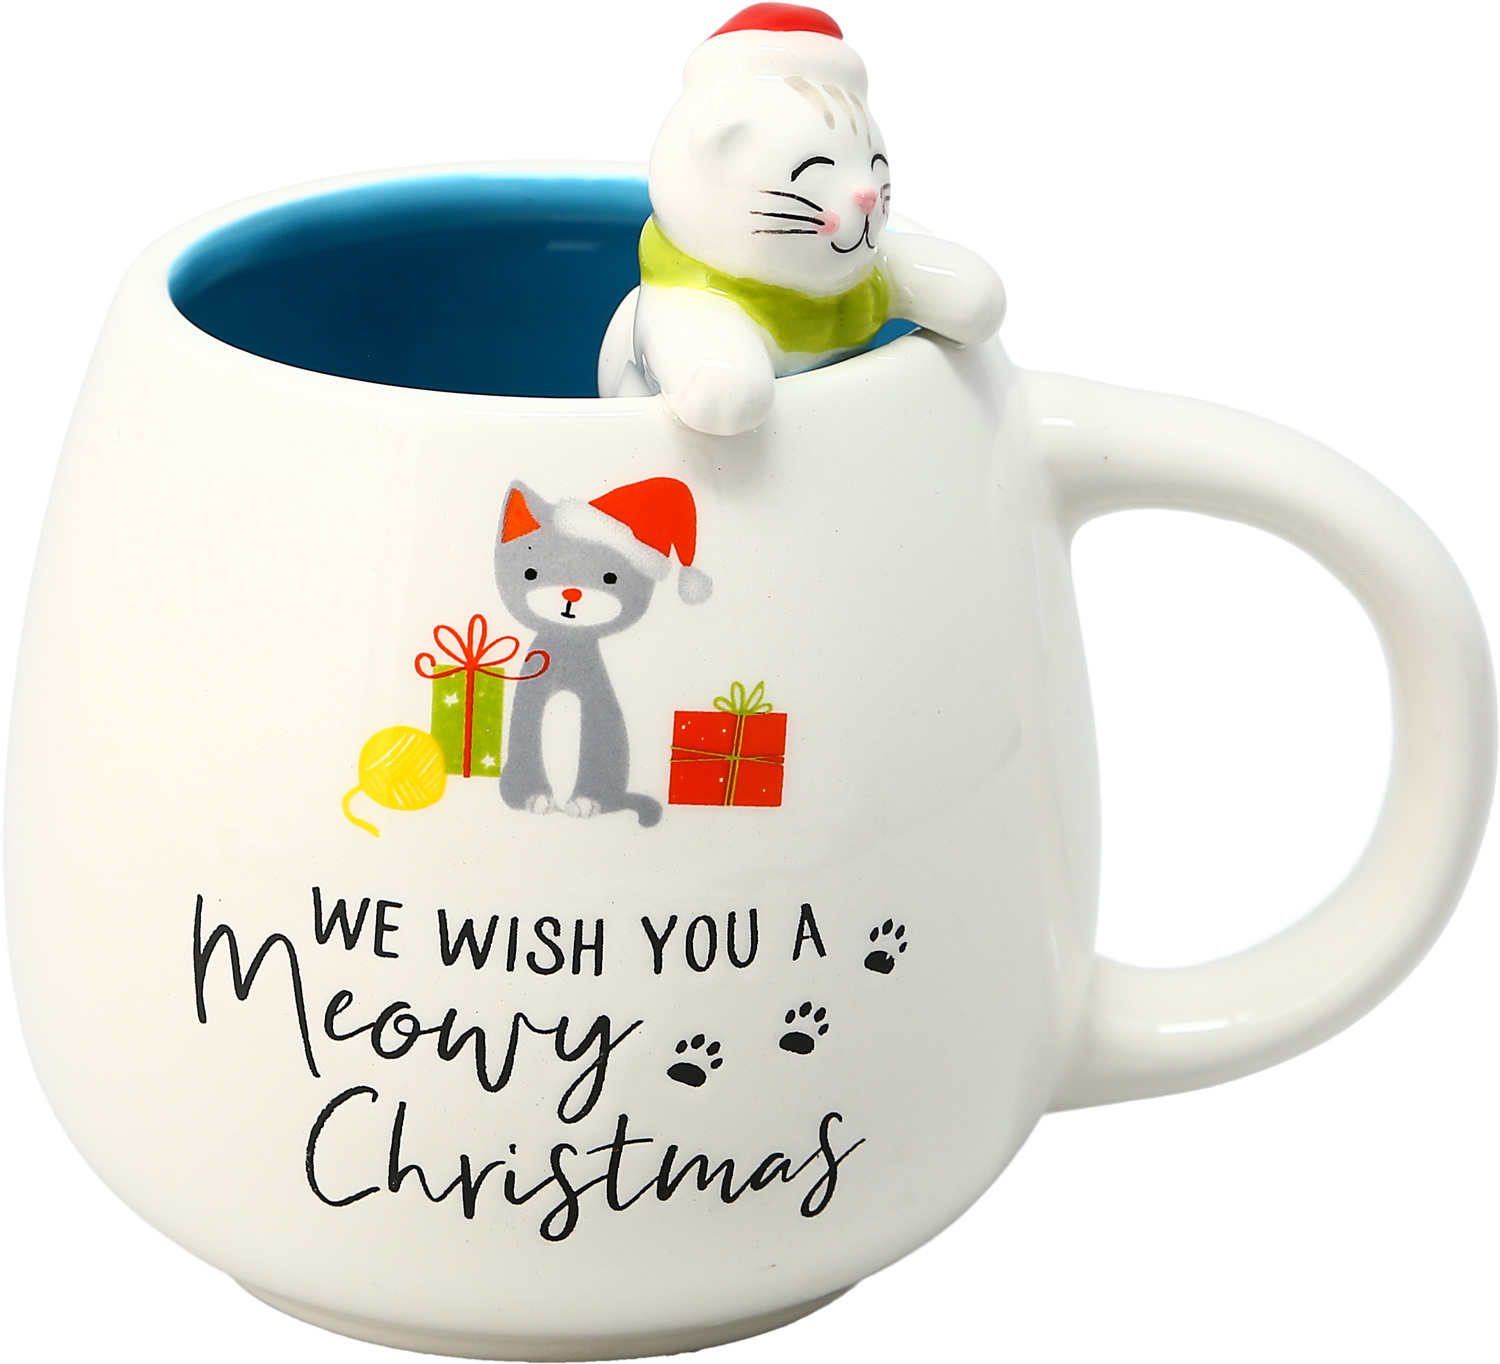 Meowy Christmas by Pavilion's Pets - Meowy Christmas - 15.5 oz Mug